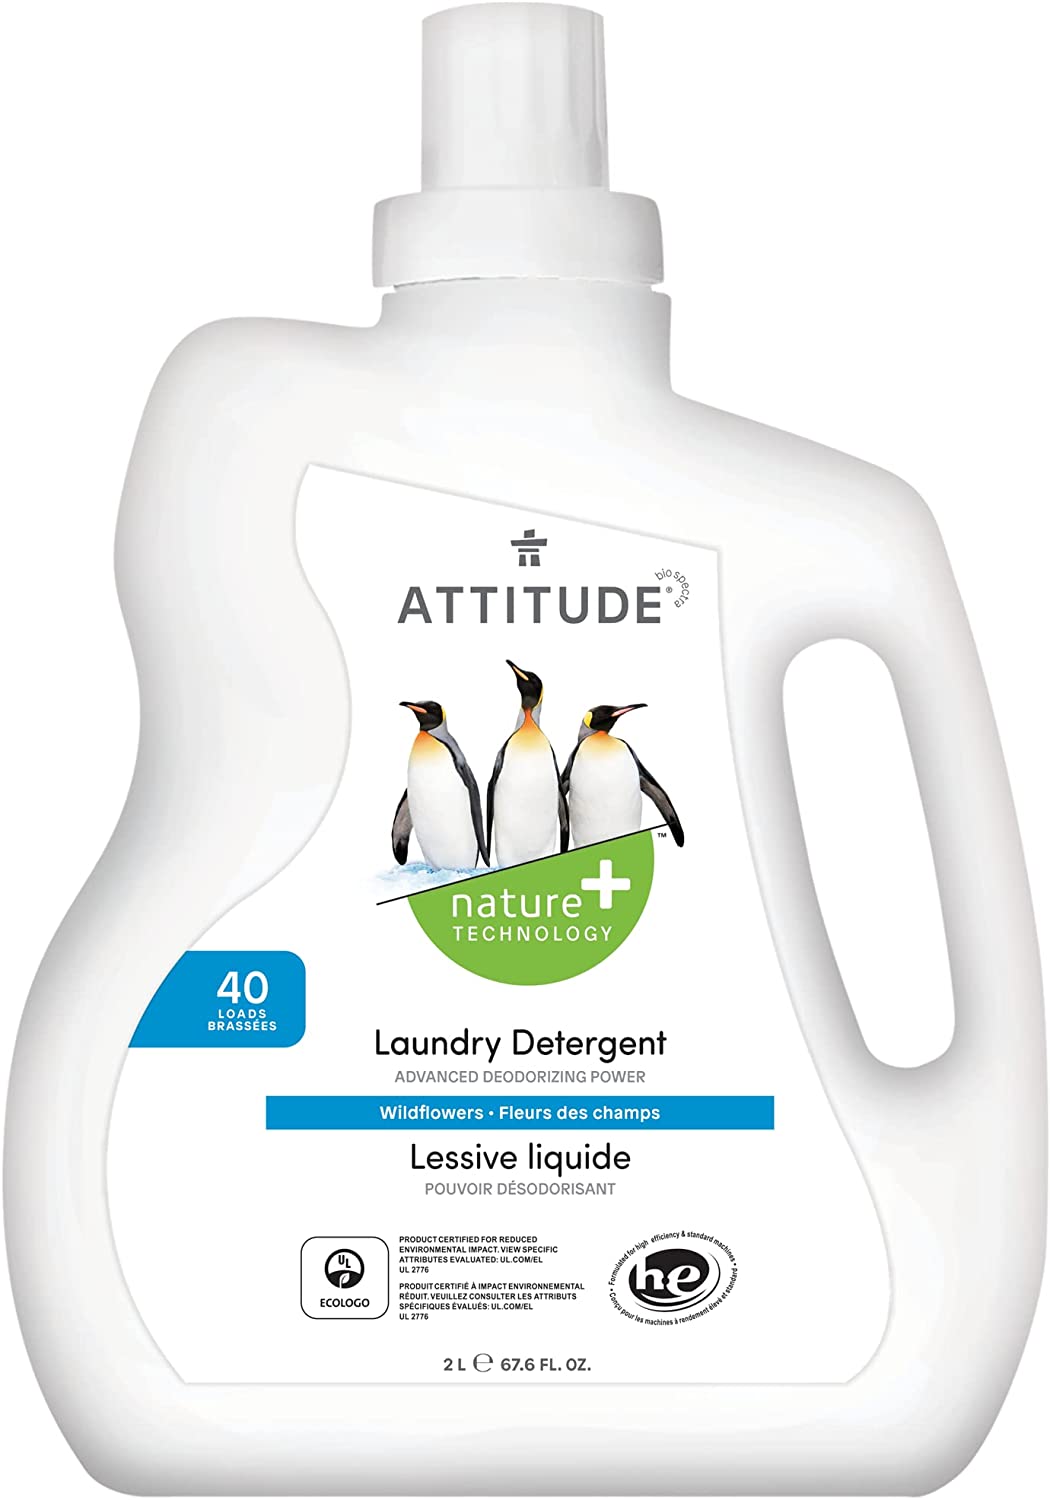 Attitude Laundry Detergent - Wildflowers